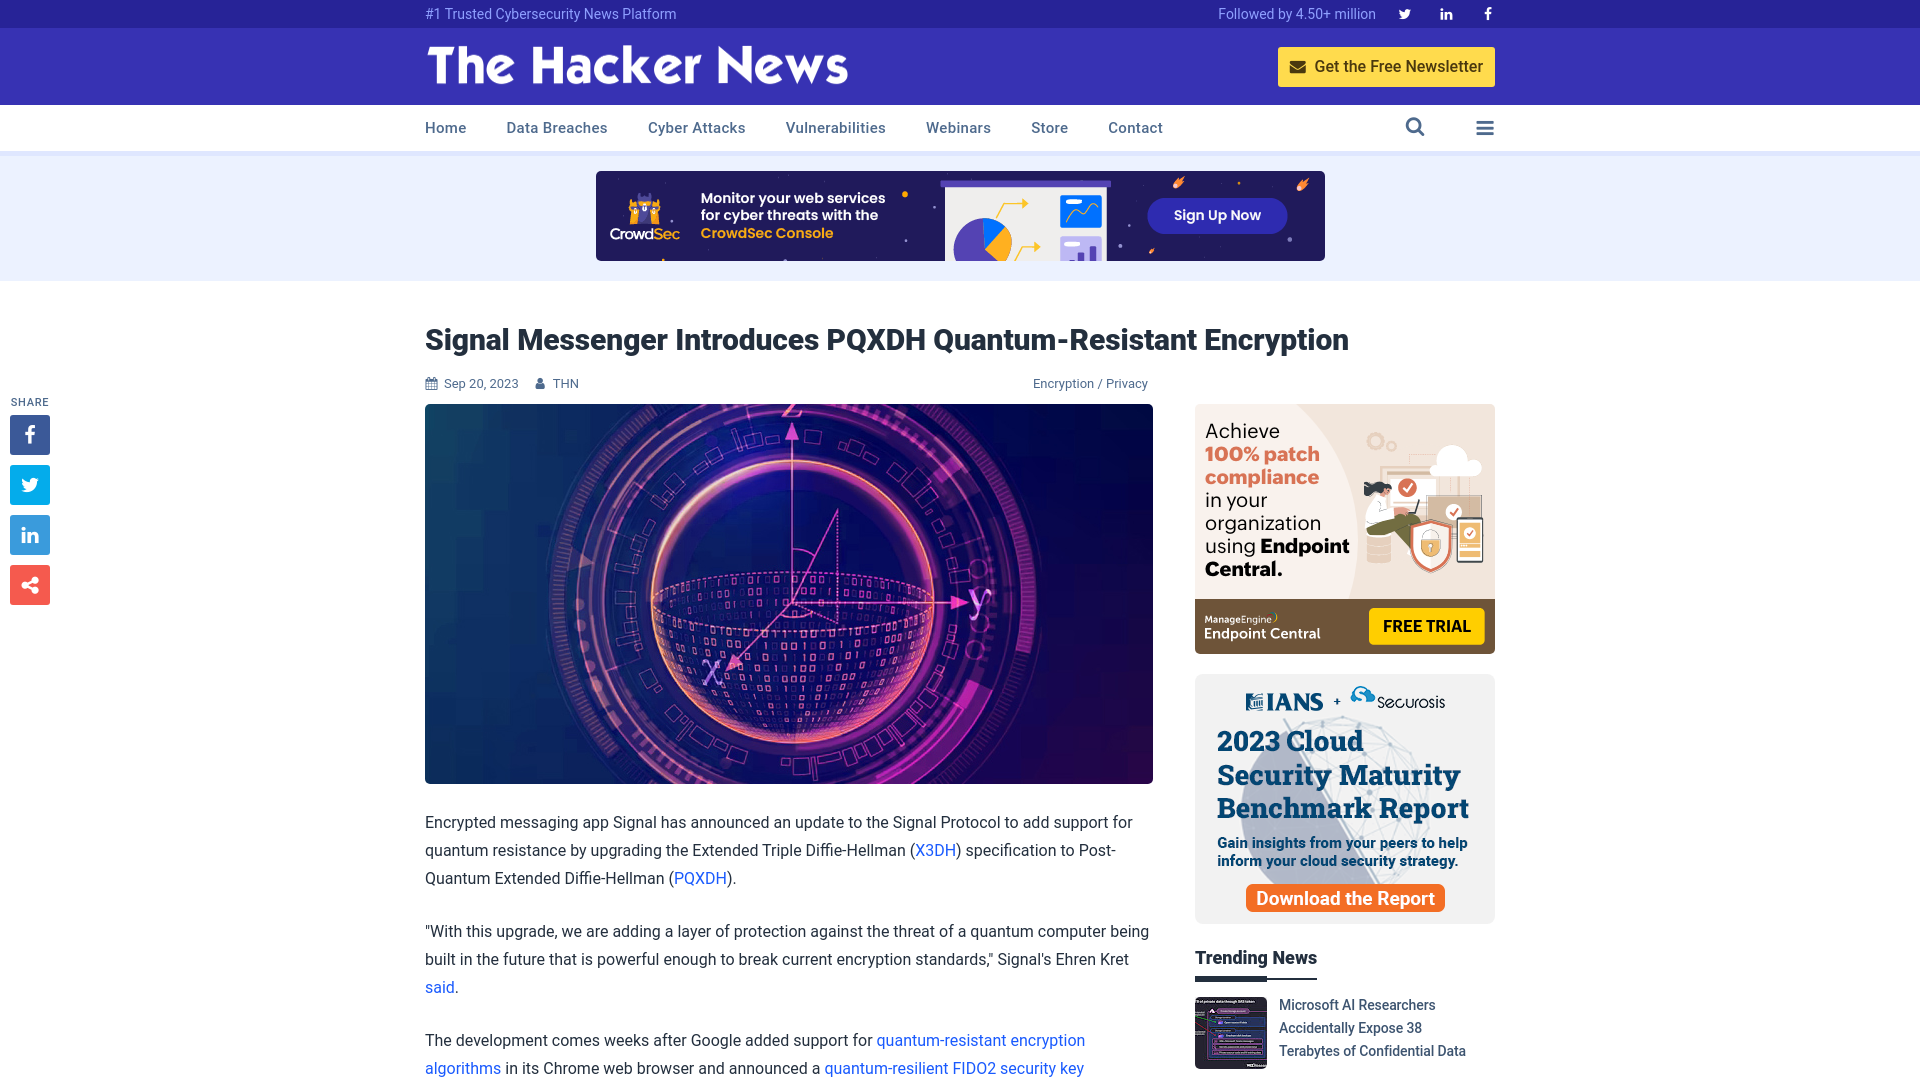 Signal Messenger Introduces PQXDH Quantum-Resistant Encryption